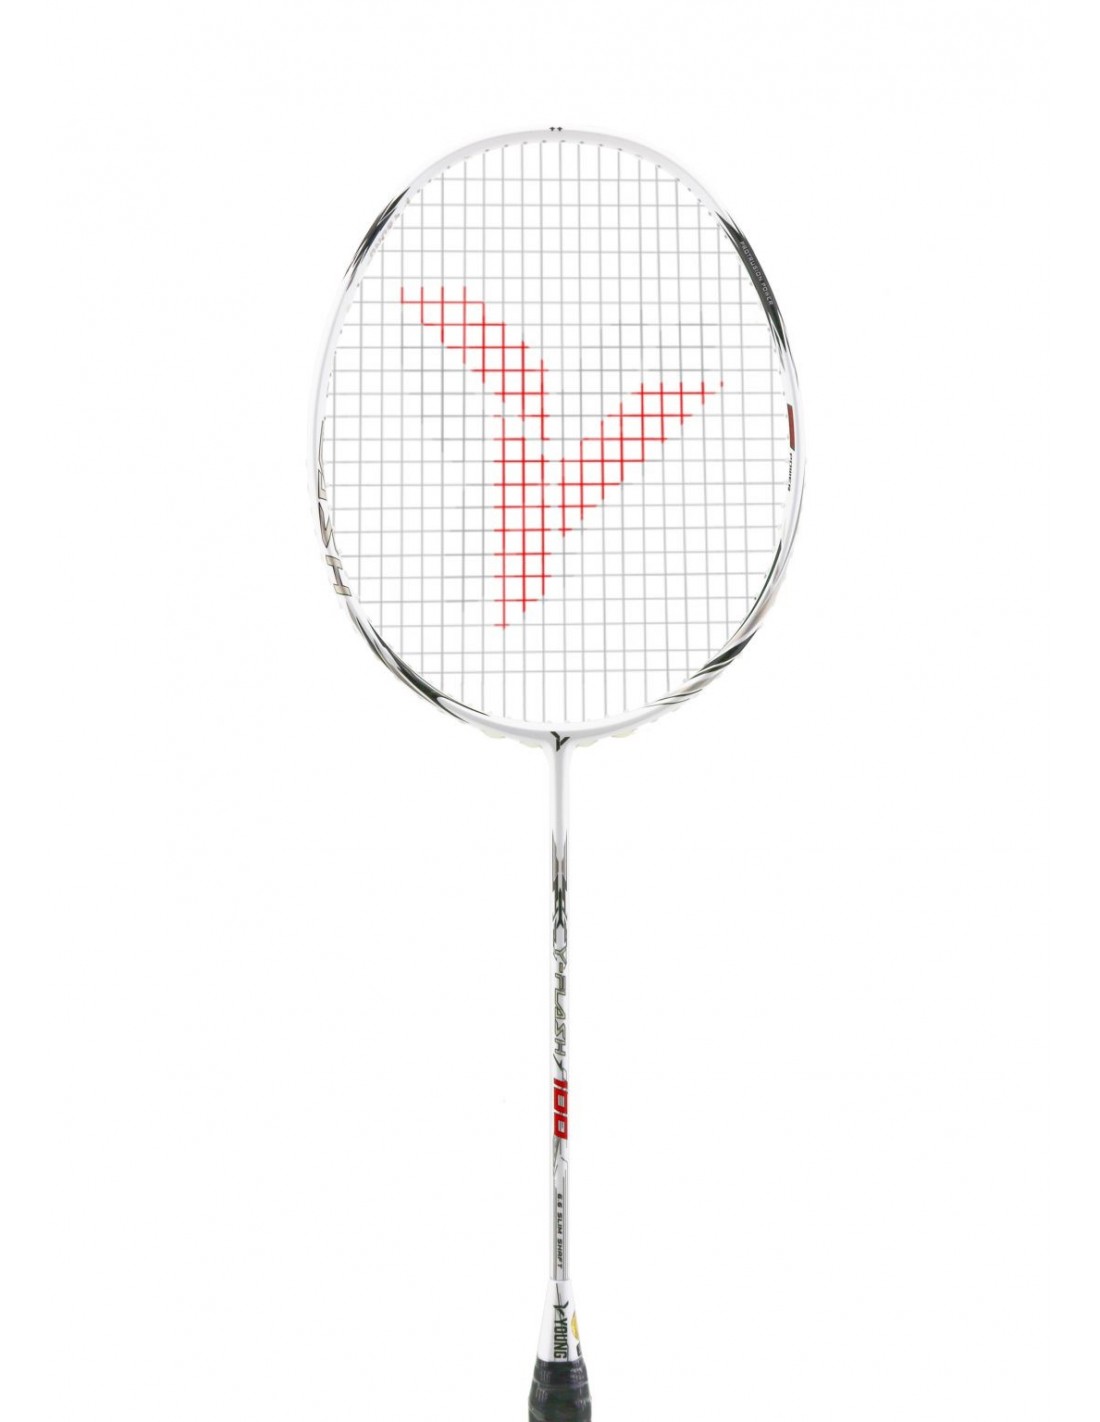 Autre accessoires de badminton Victor Adidas surgrip badminton